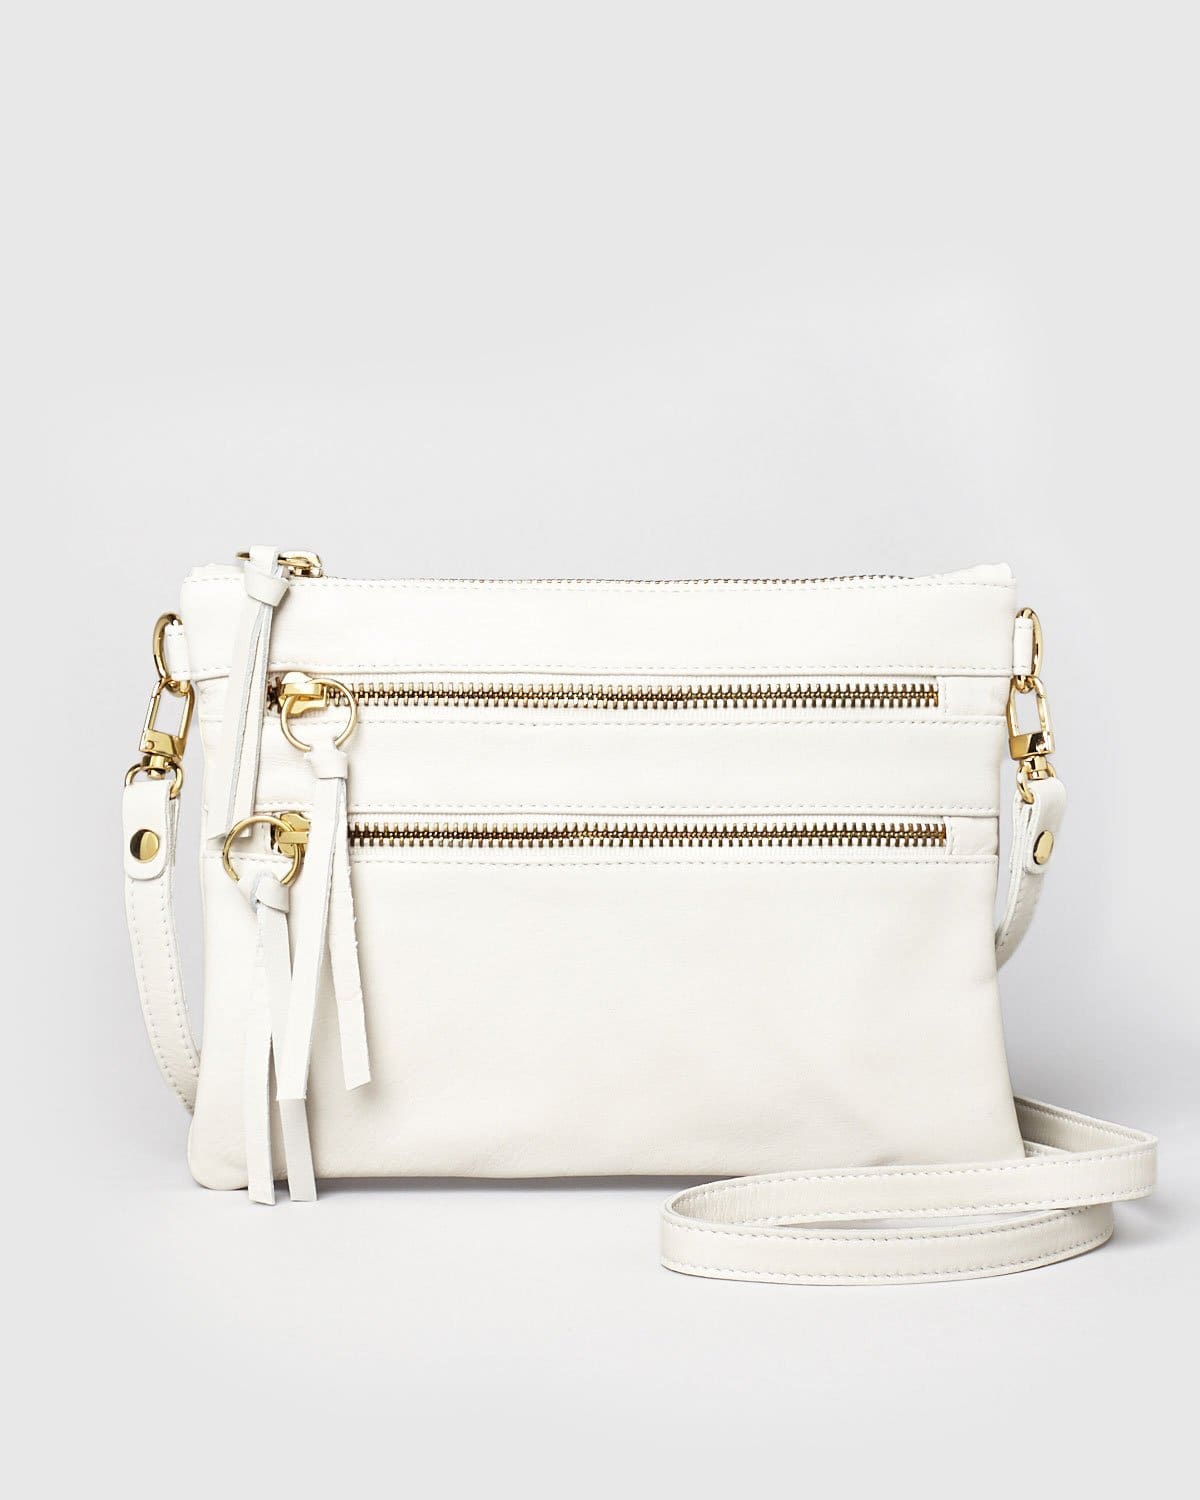 Essex - White Leather Handbag Made in NYC | Pietro NYC